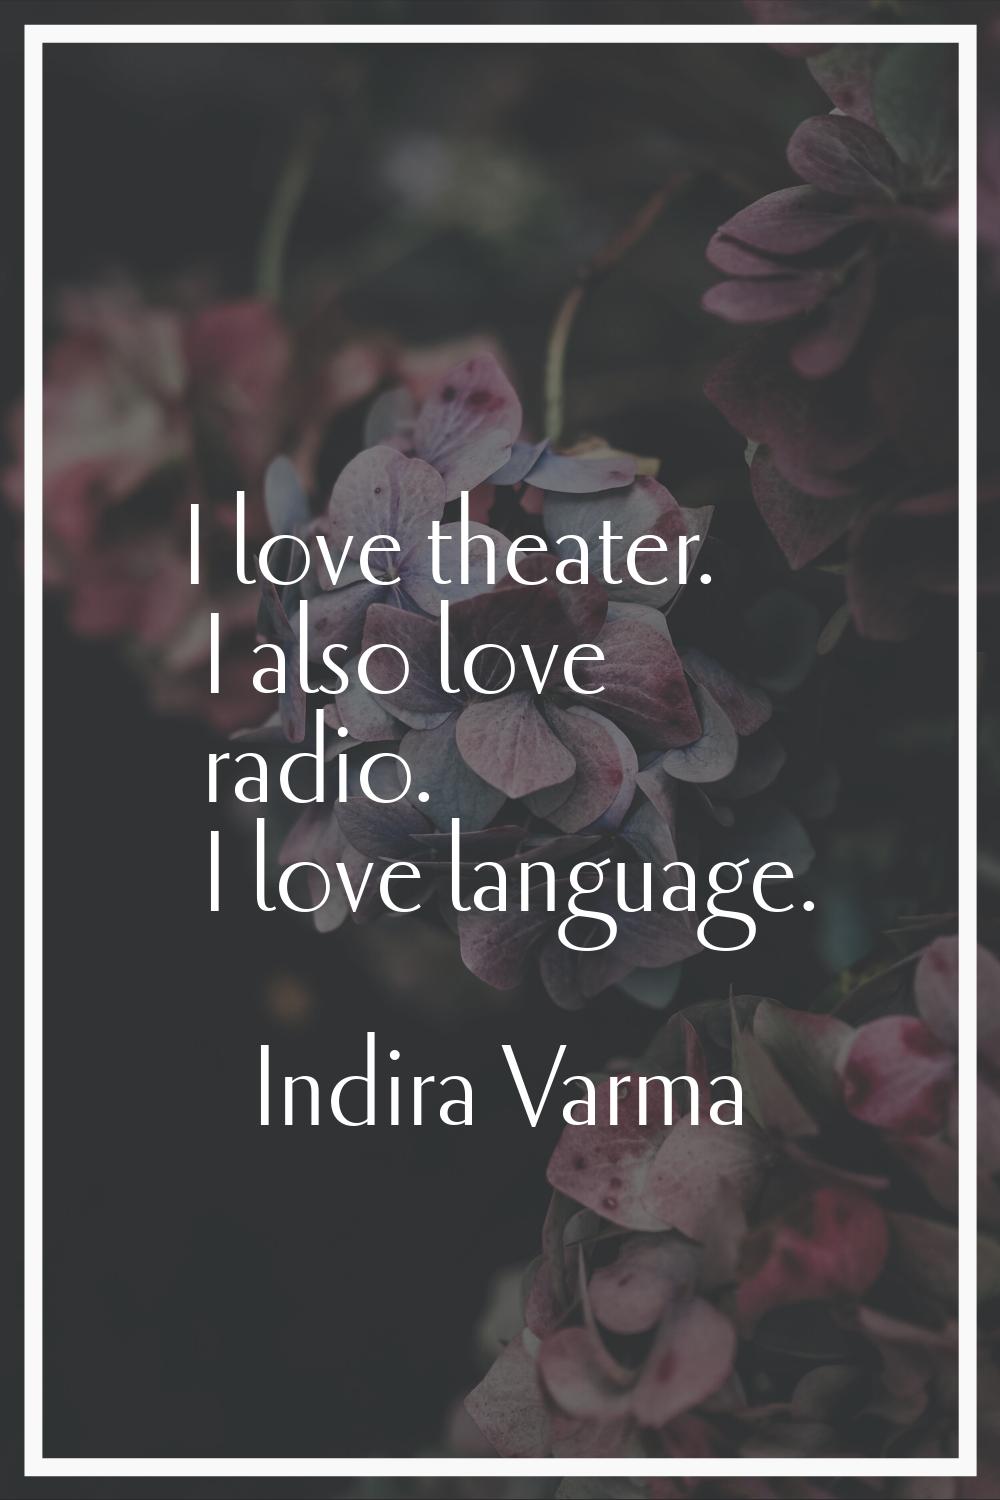 I love theater. I also love radio. I love language.